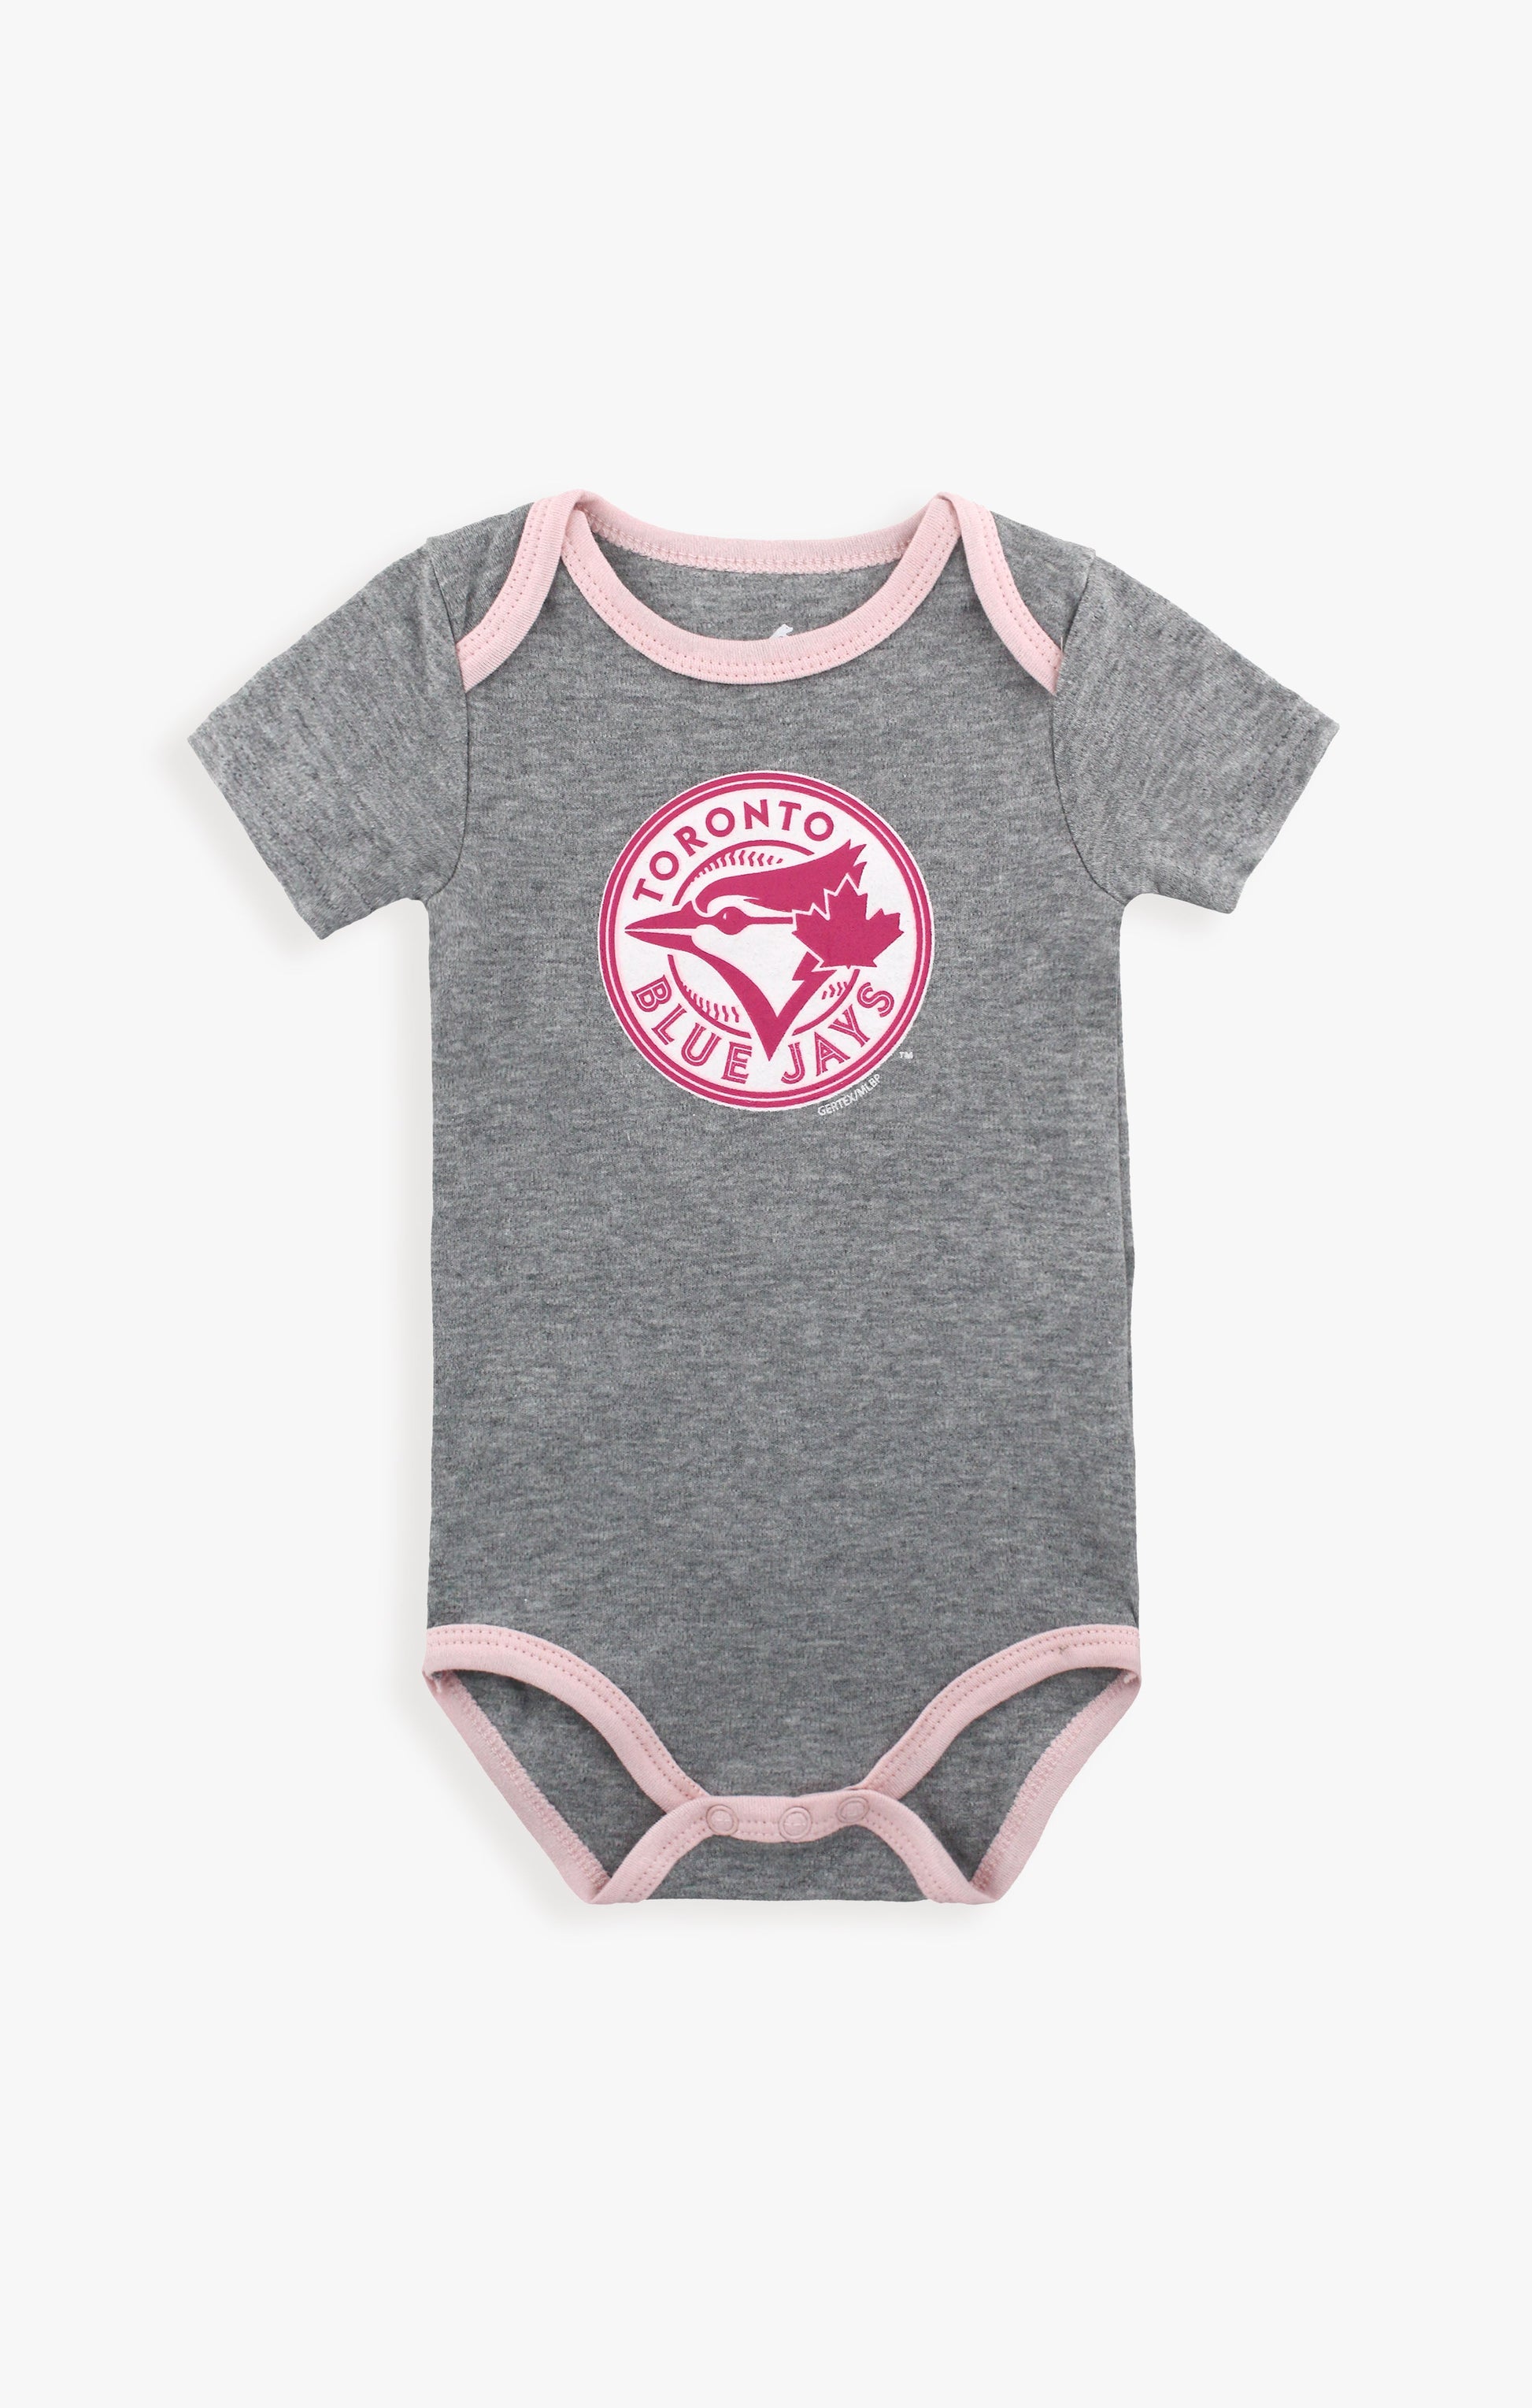 Gertex MLB Toronto Blue Jays 3 Pack Baby Onesie Body Suits in Pink